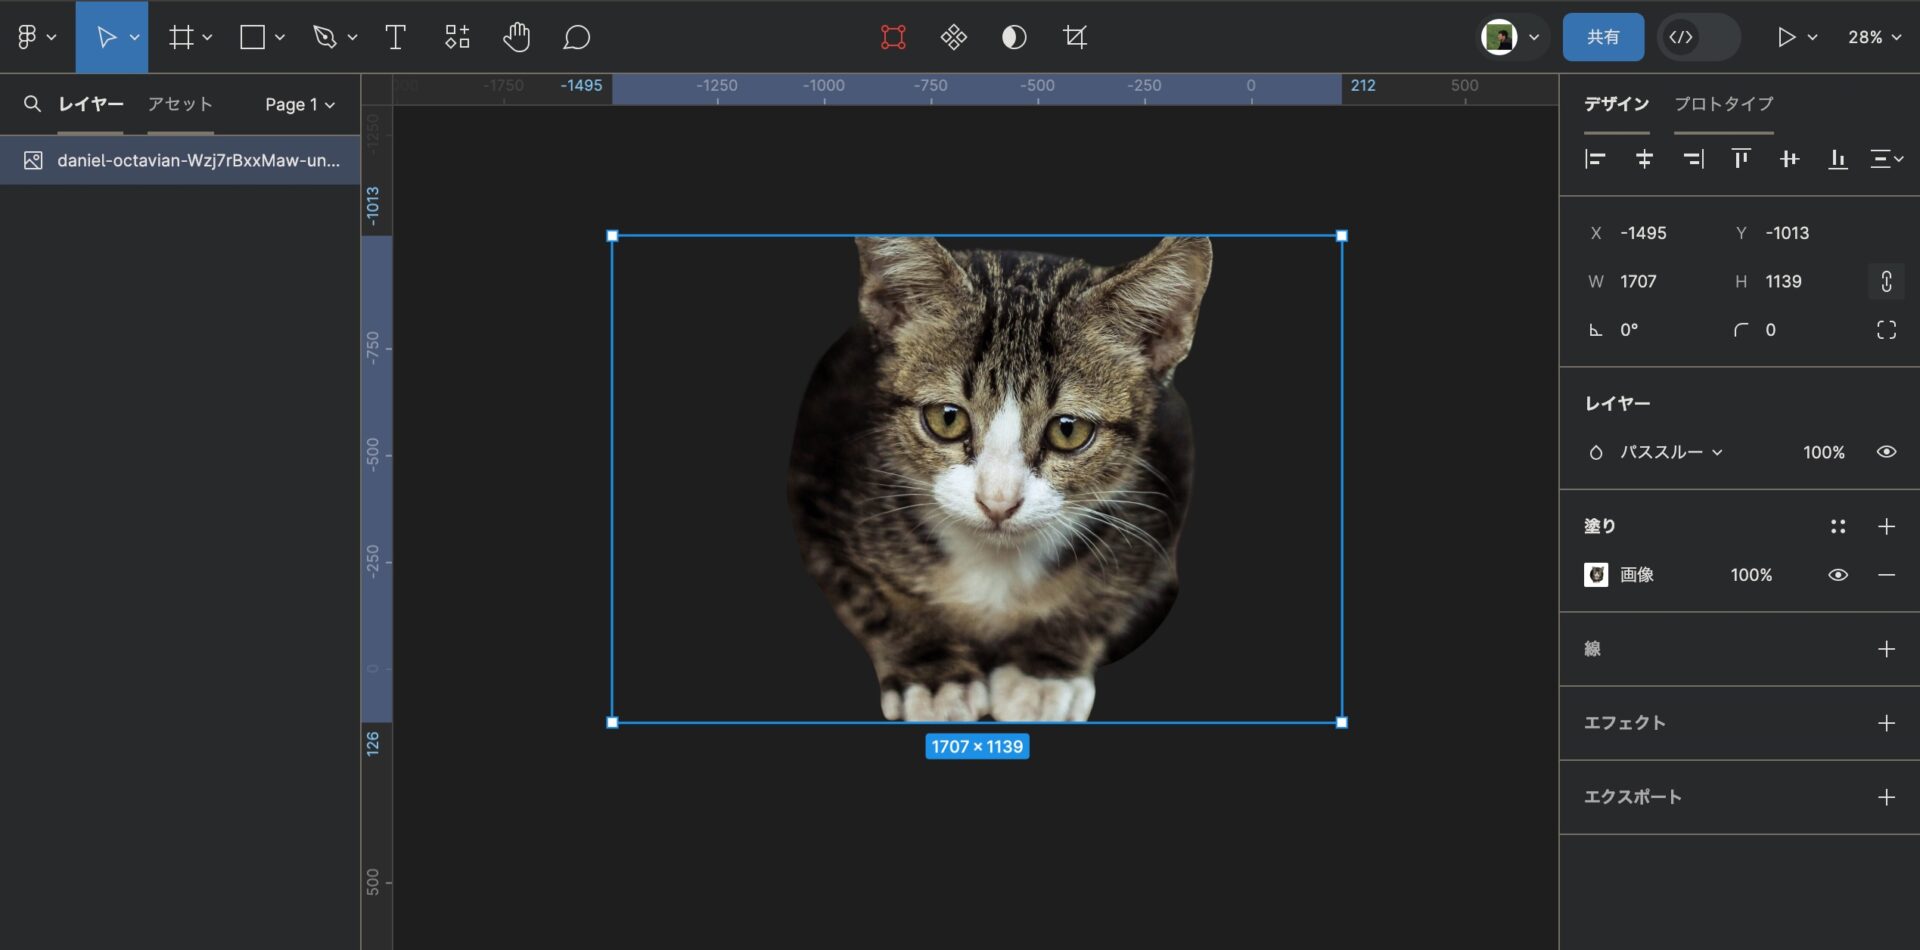 FigmaのRemove BGプラグインで背景画像を削除する。